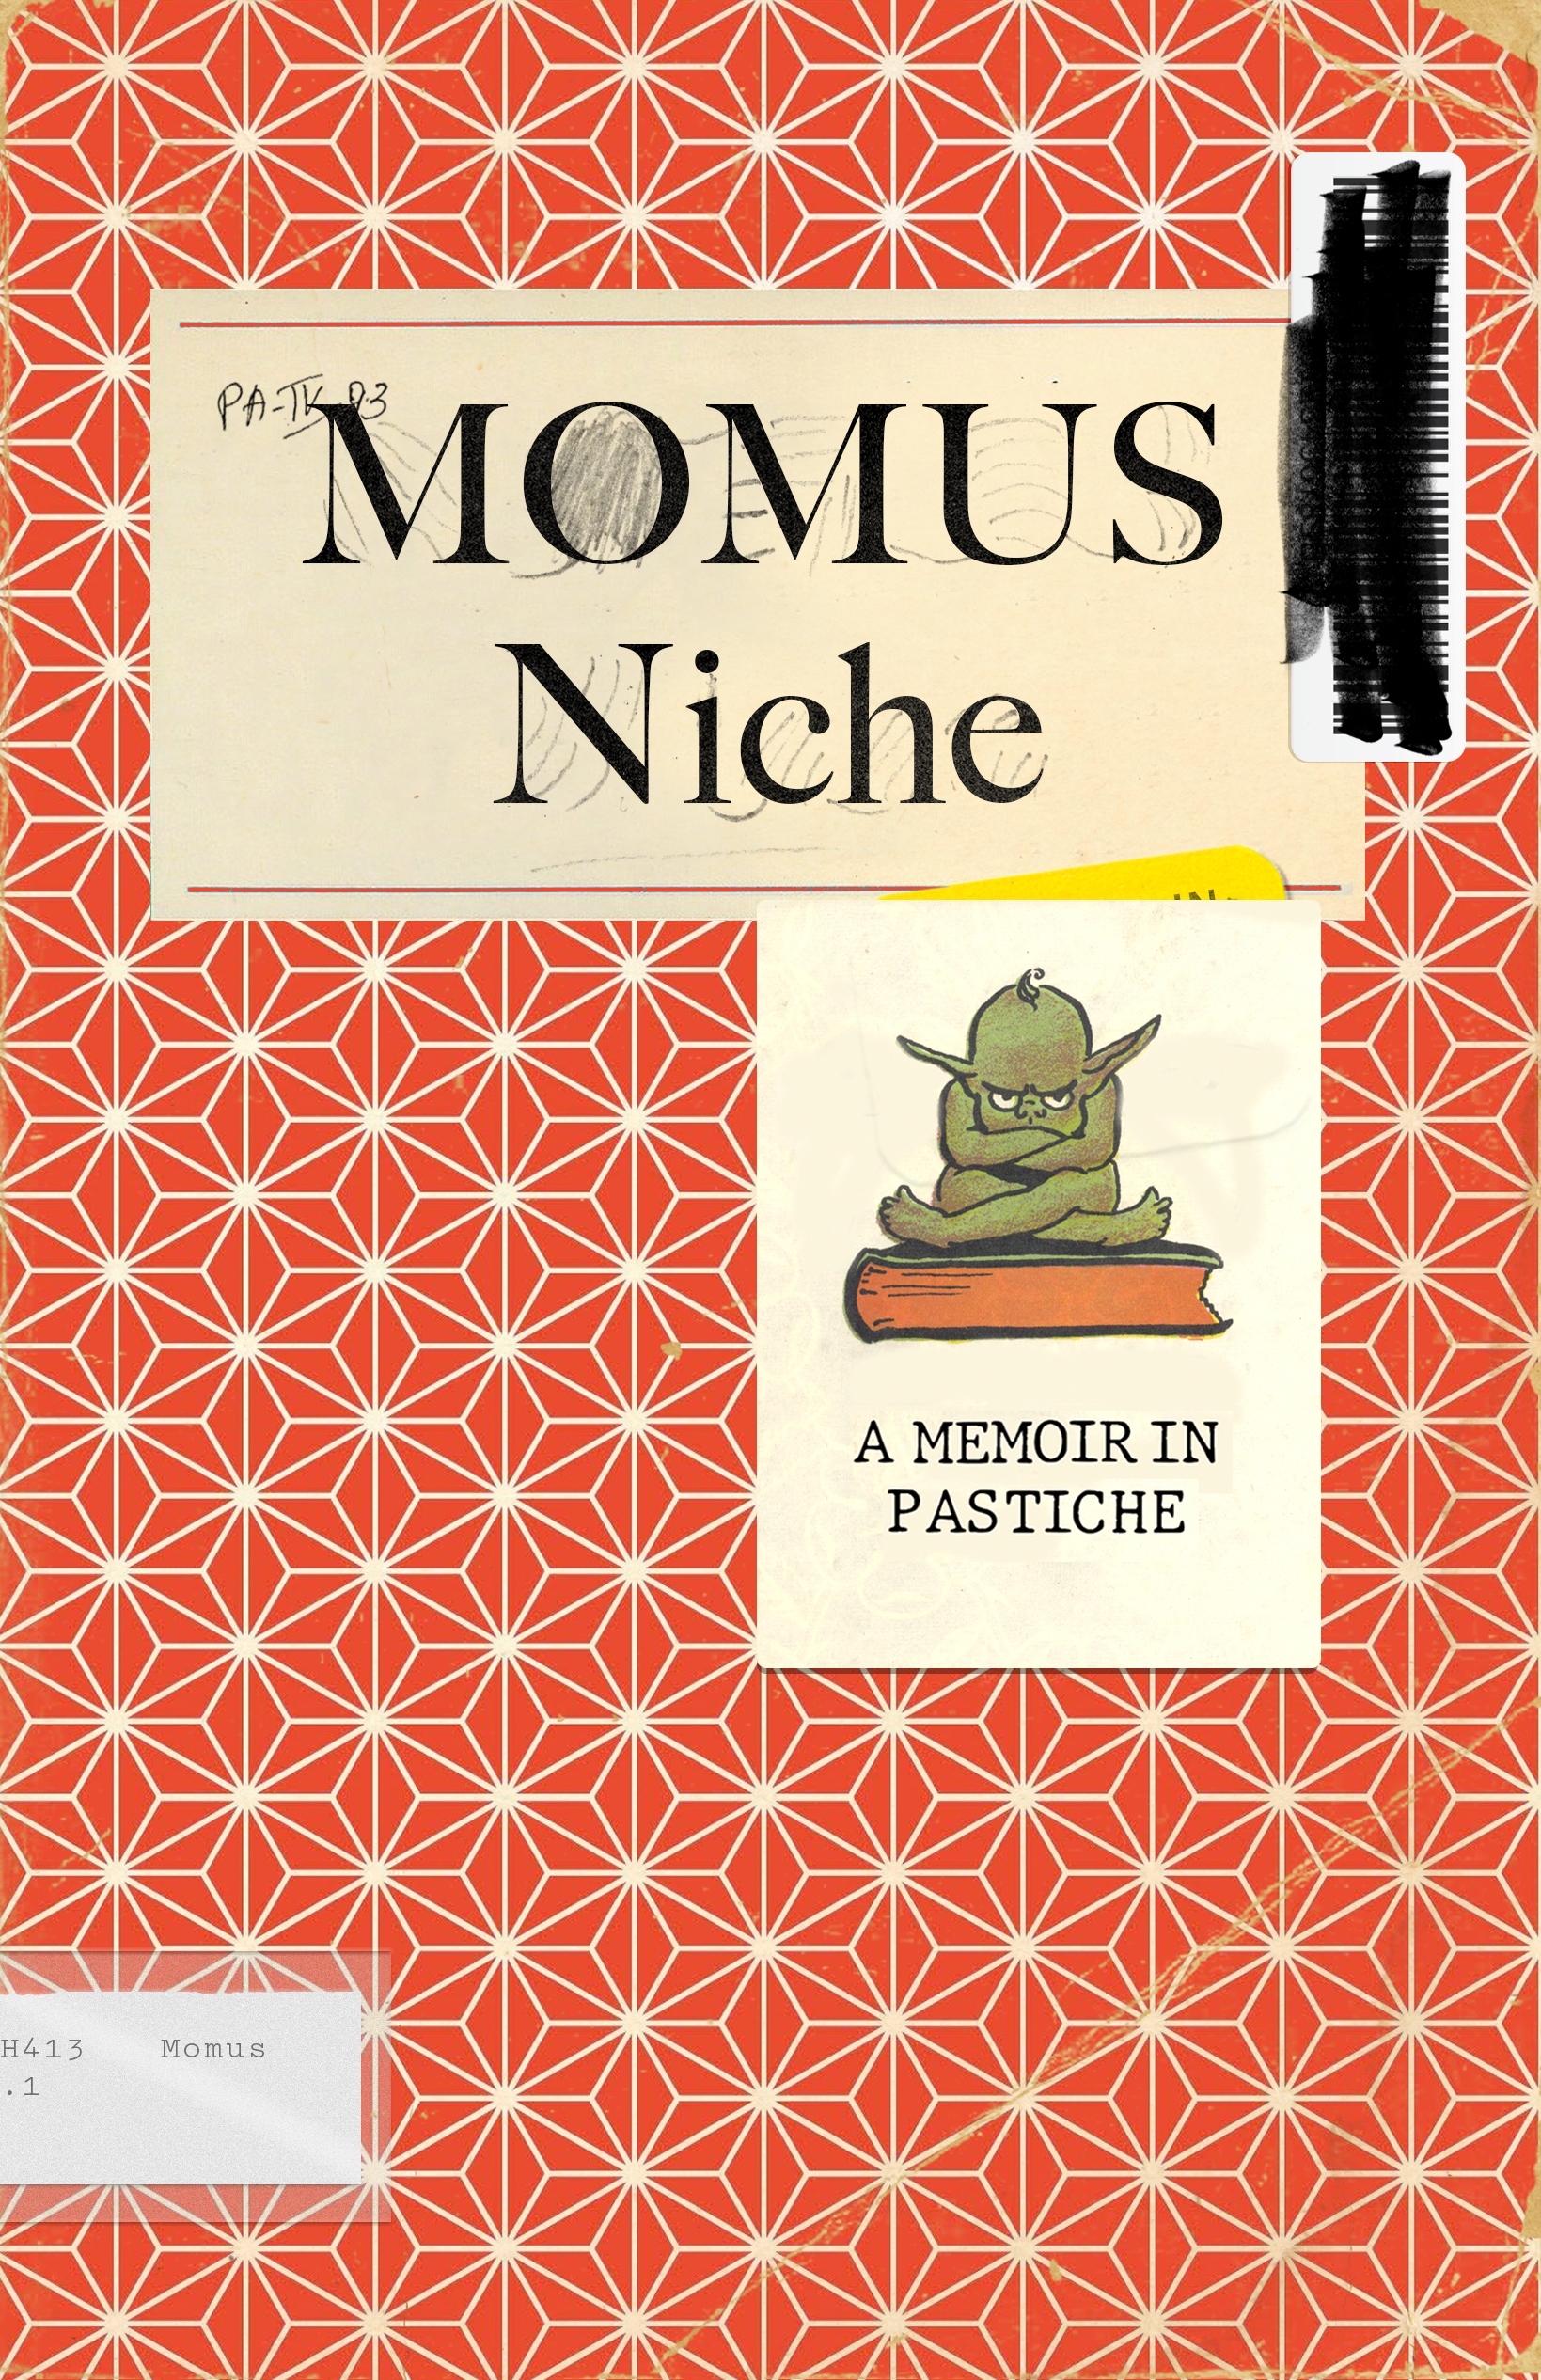 Book “Niche” by Momus — July 14, 2020